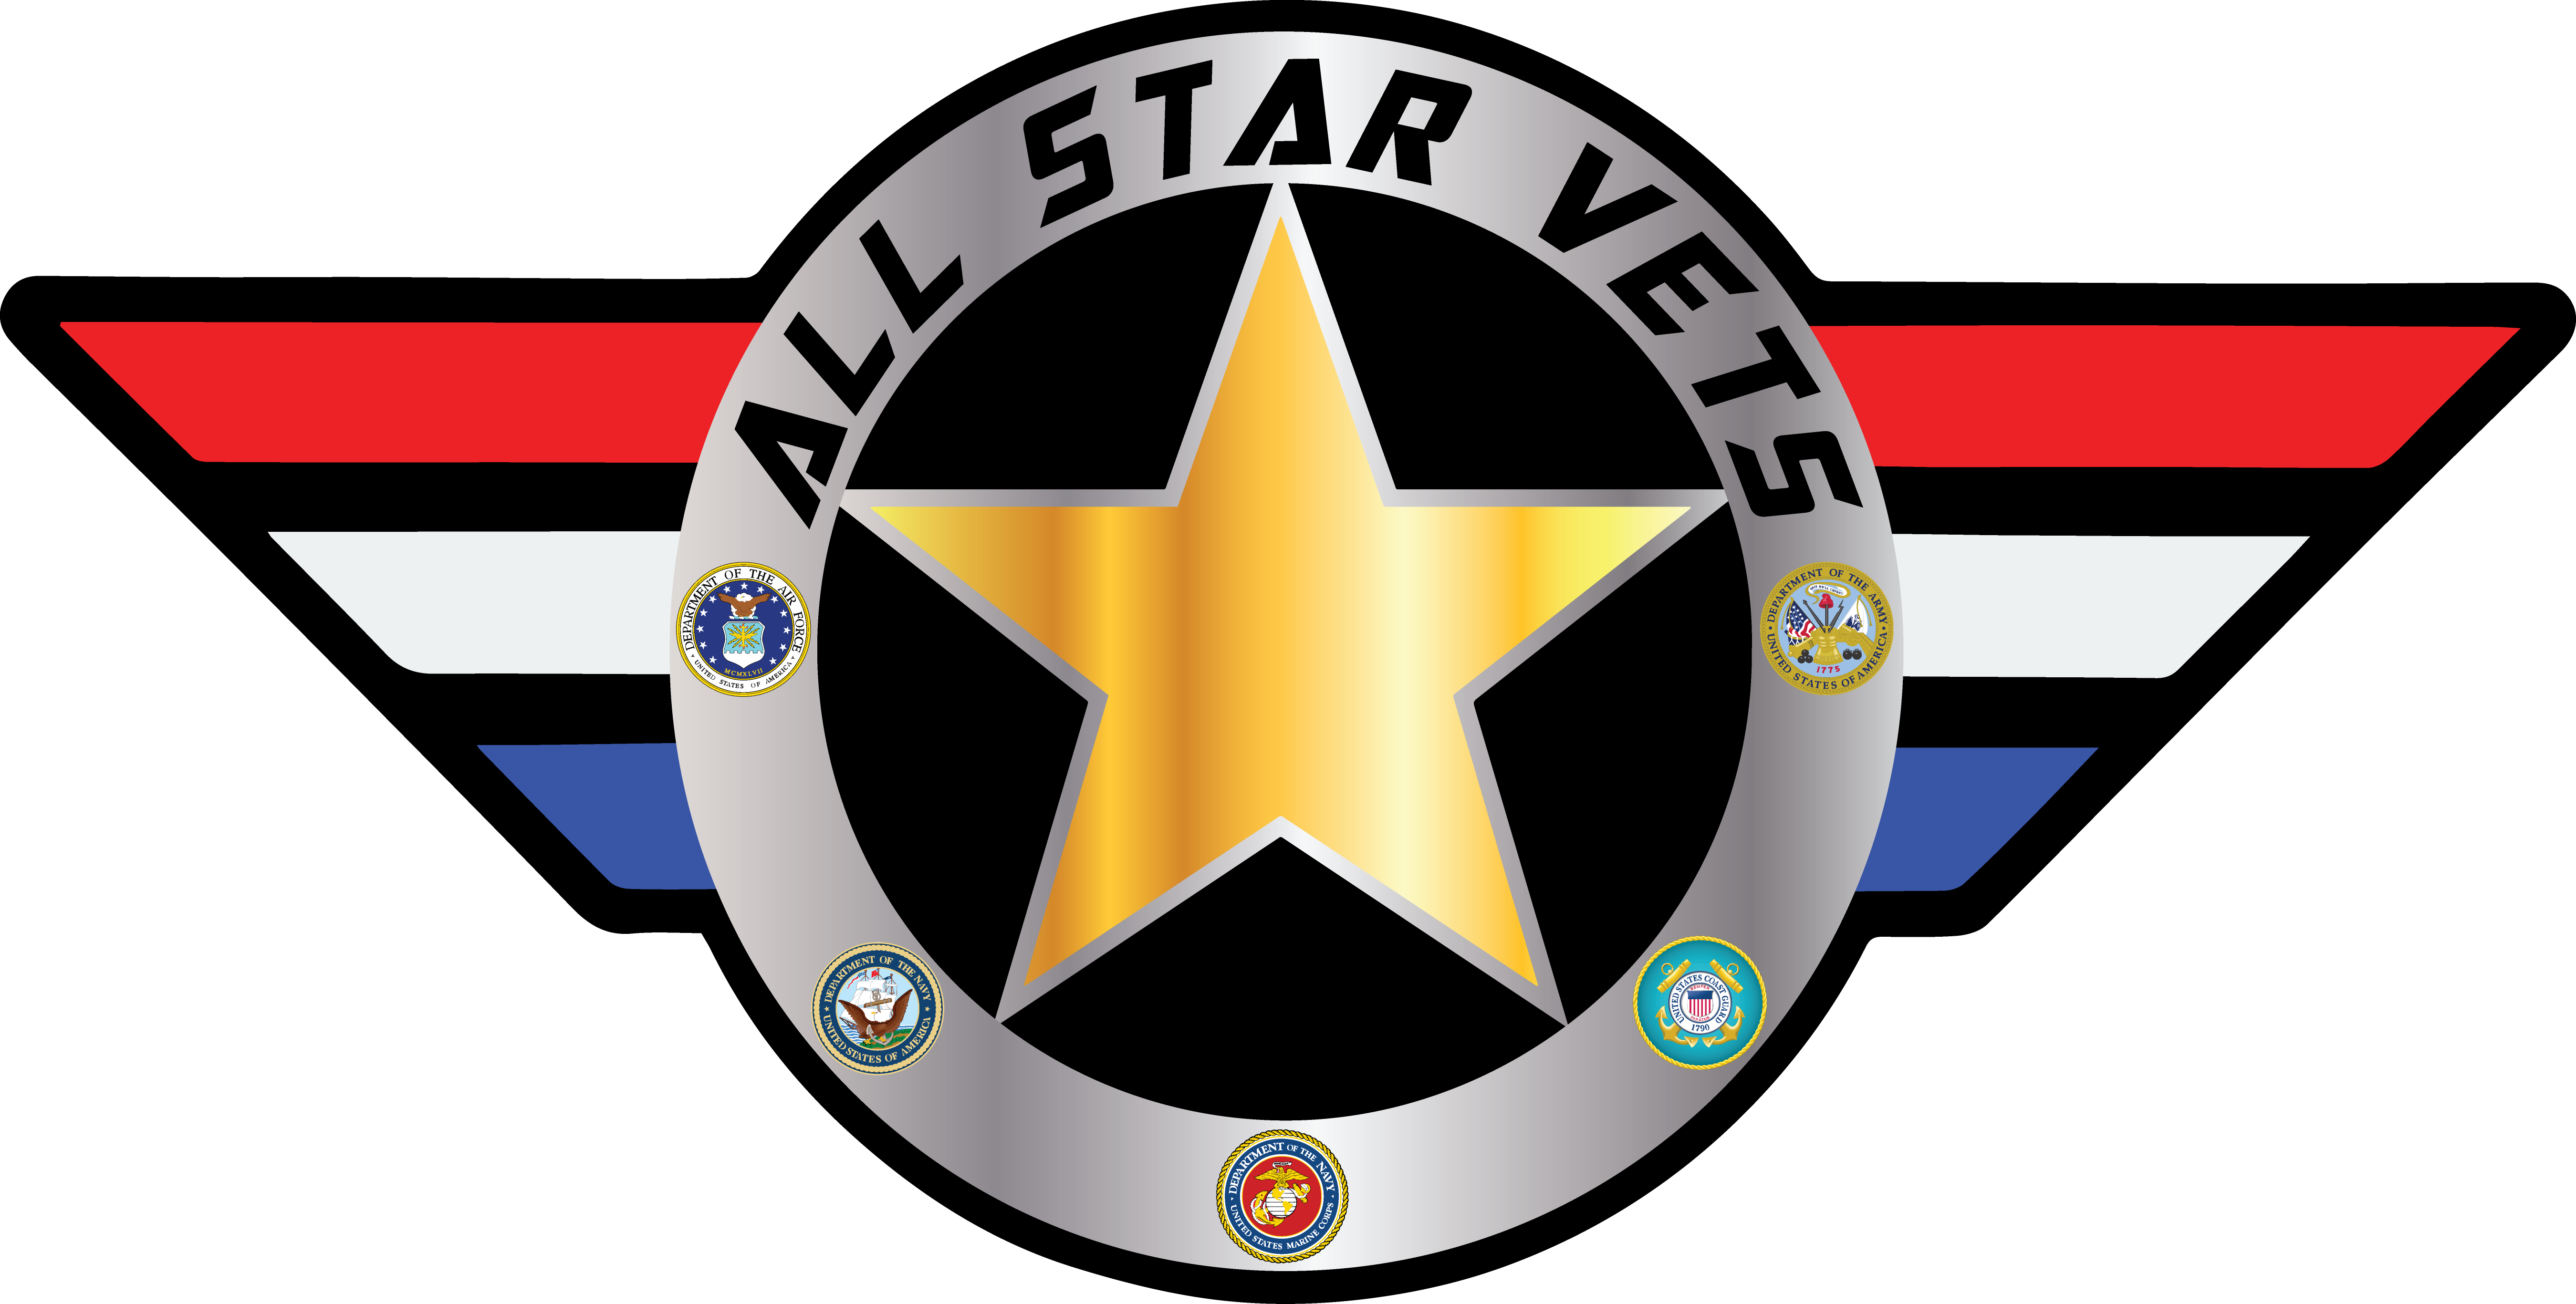 All Star Vets (5399x2734)